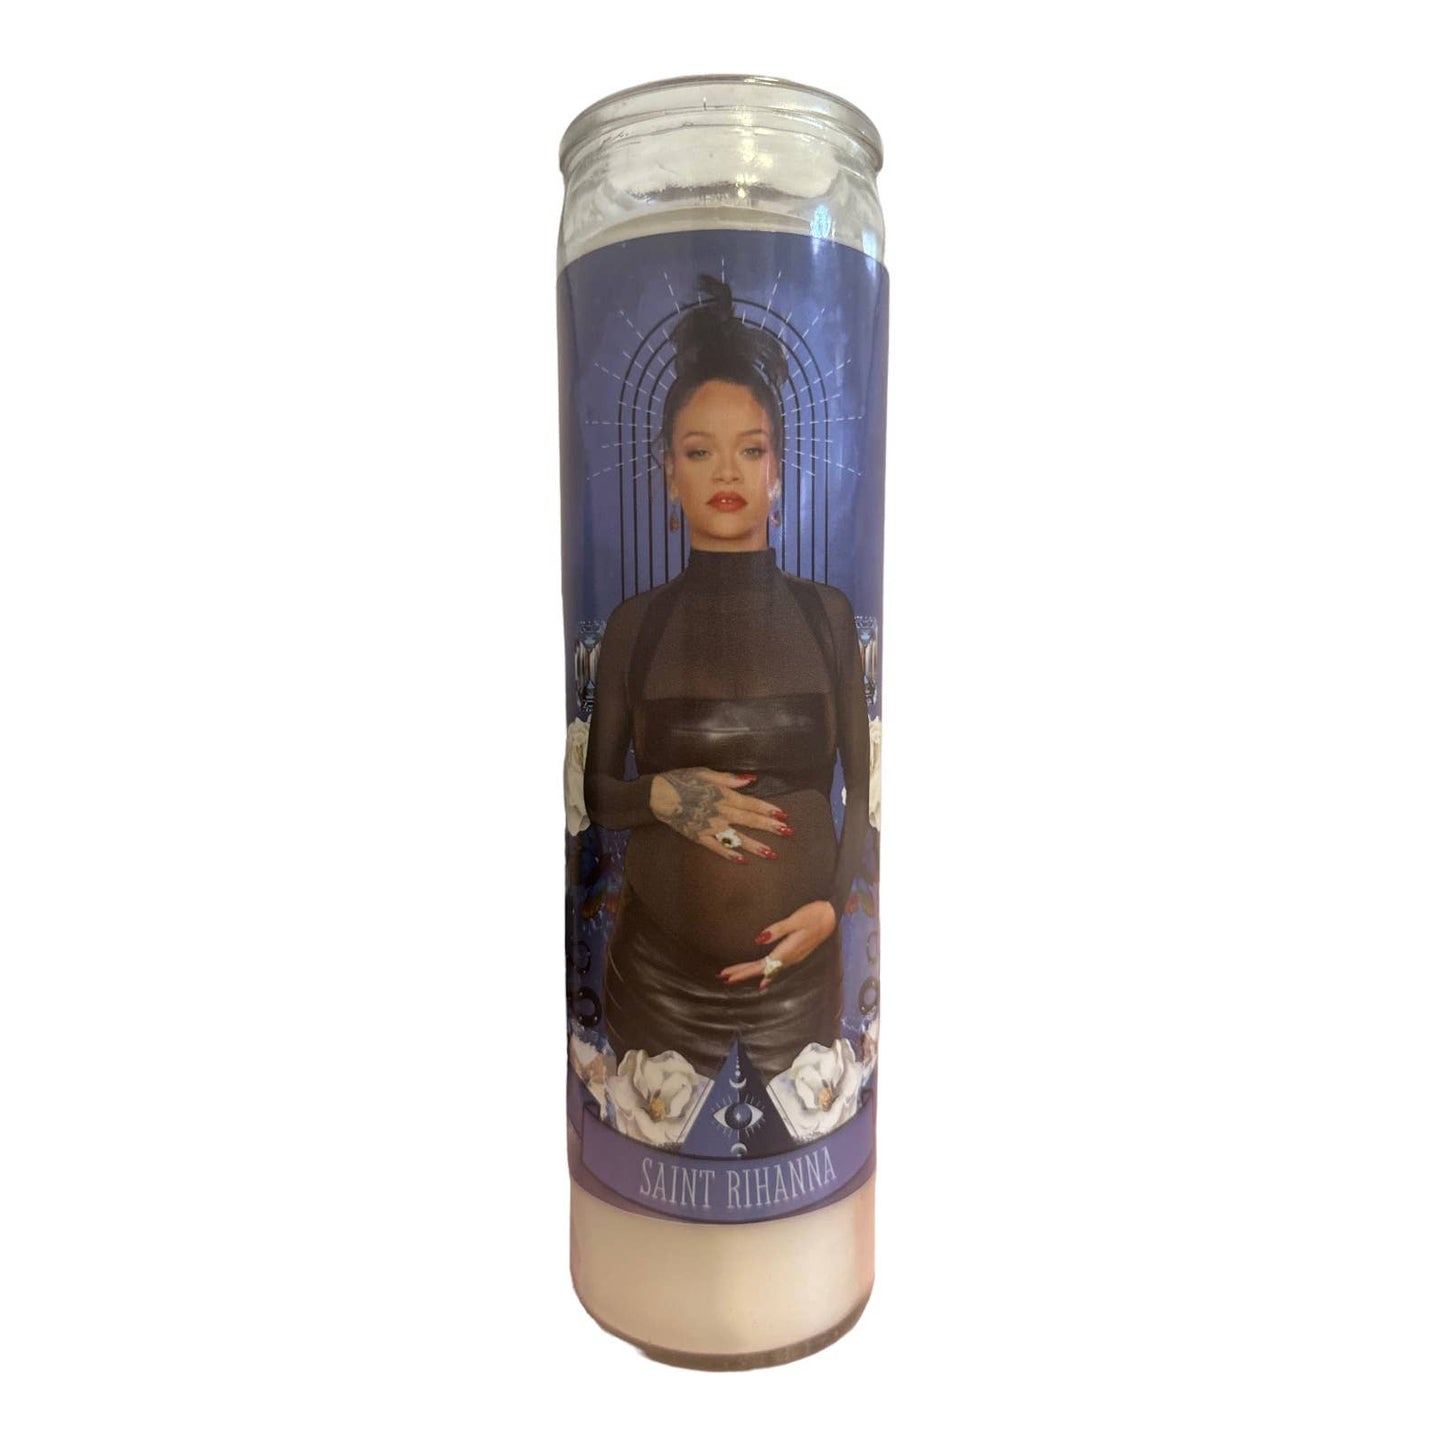 The Luminary Rihanna Altar Candle